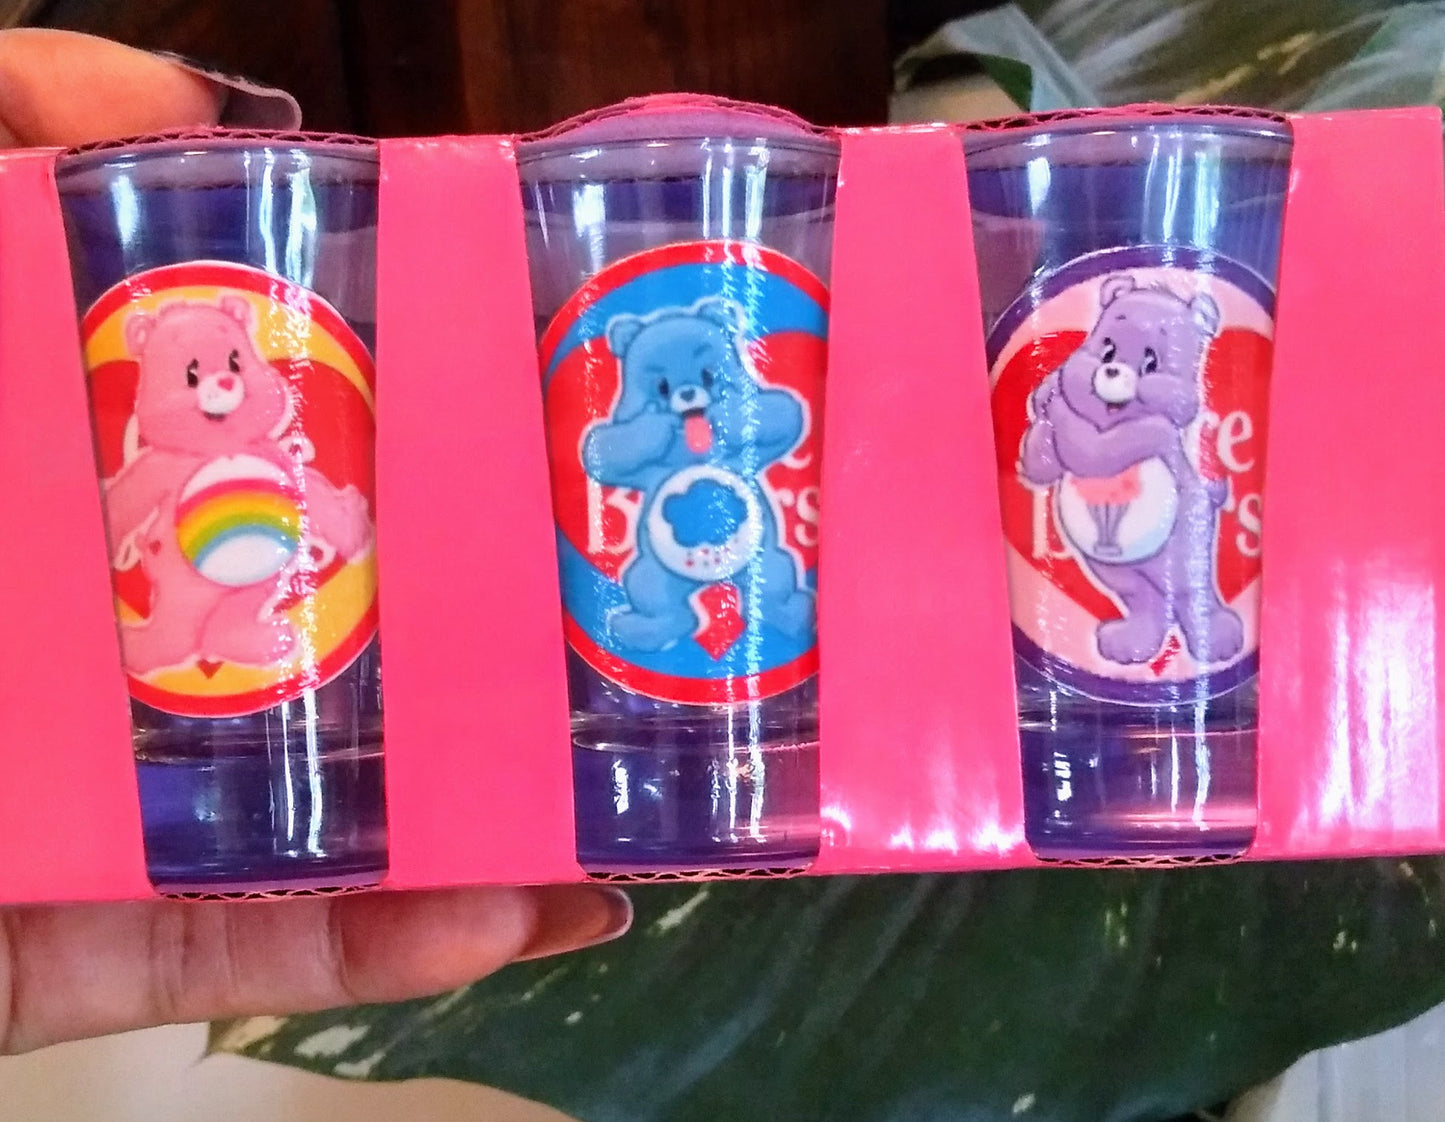 Care Bears Inspired Handmade 3 piece shot glass custom set